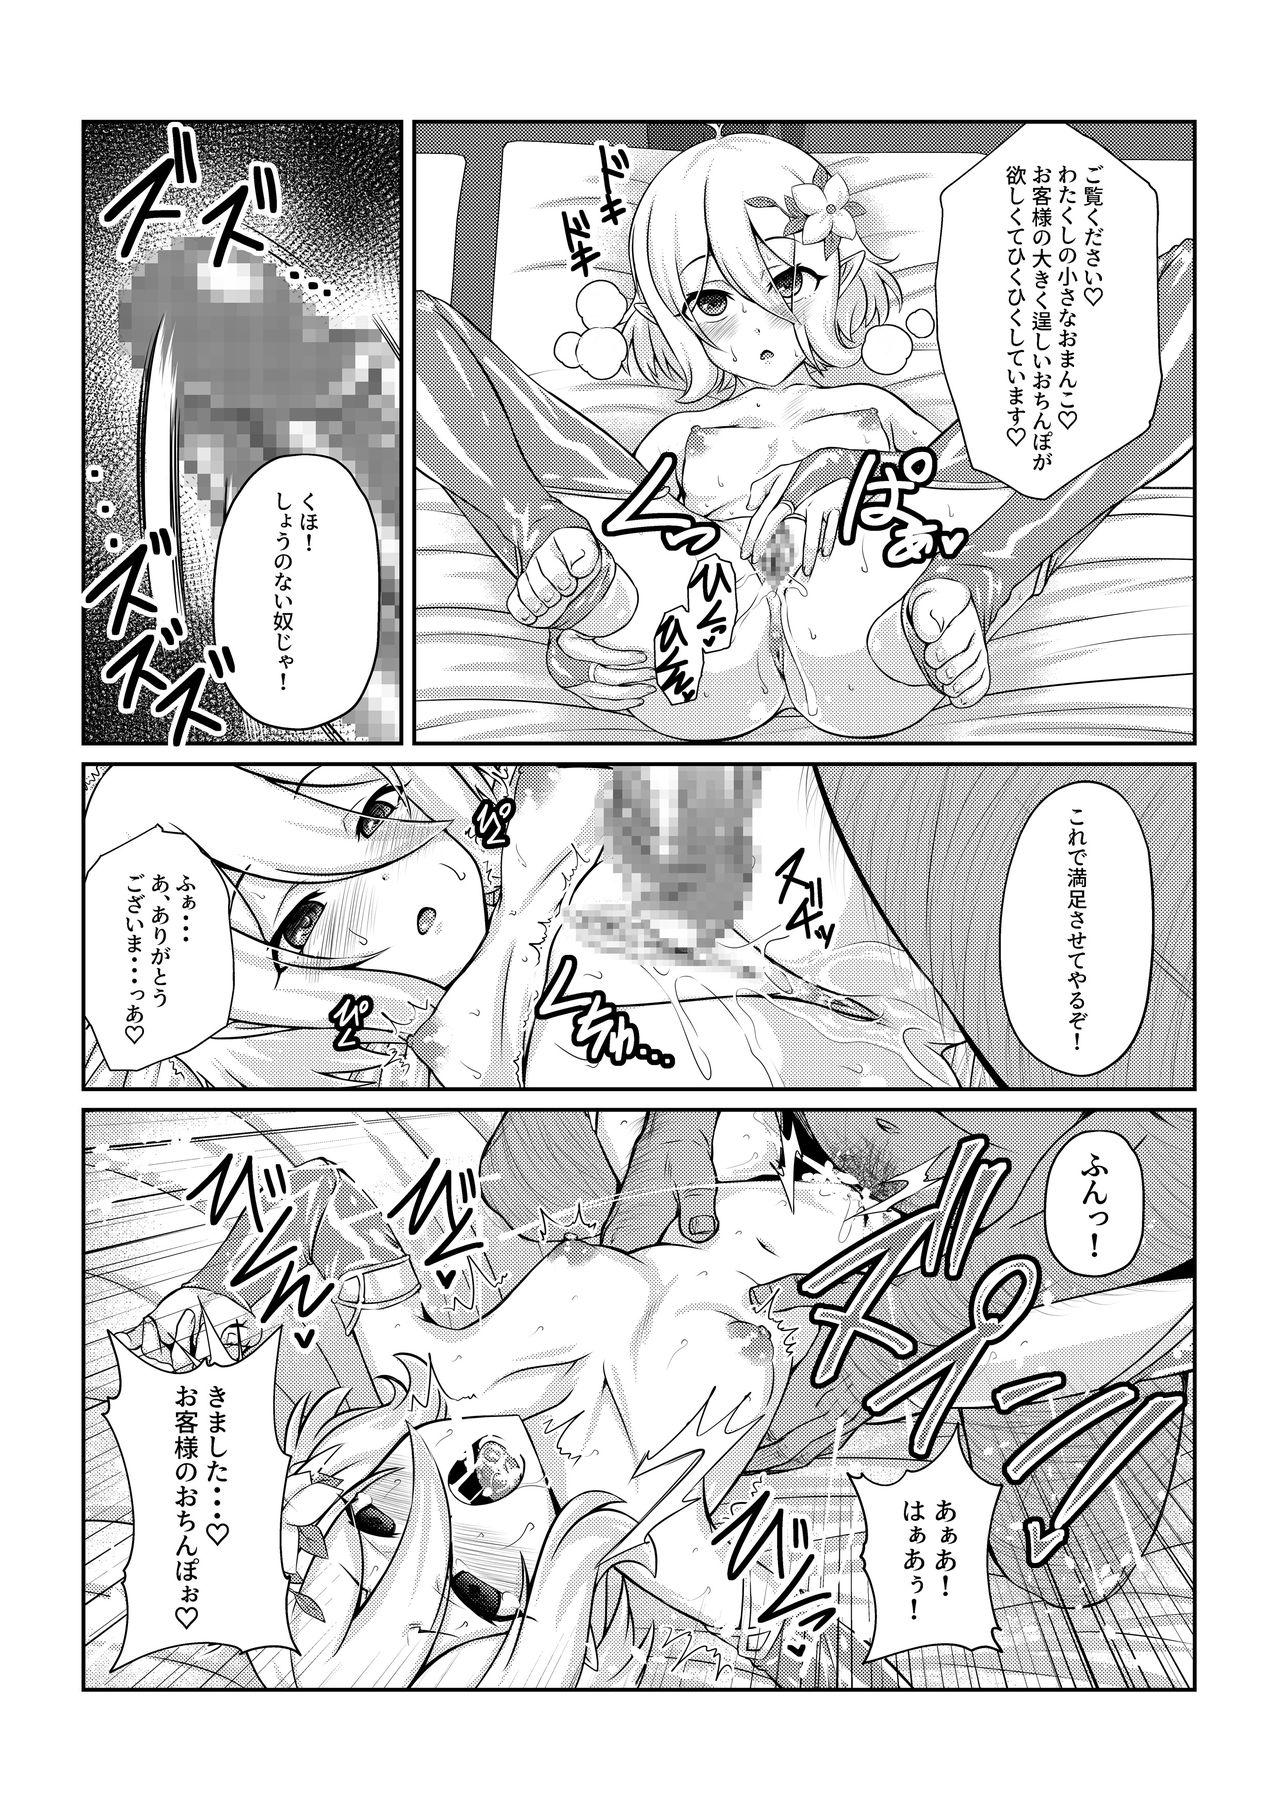 Twinkstudios [Fuwa Fuwa Pinkchan] -Kokoro- (Princess Connect Re:Dive) - Princess connect Big Tits - Page 9